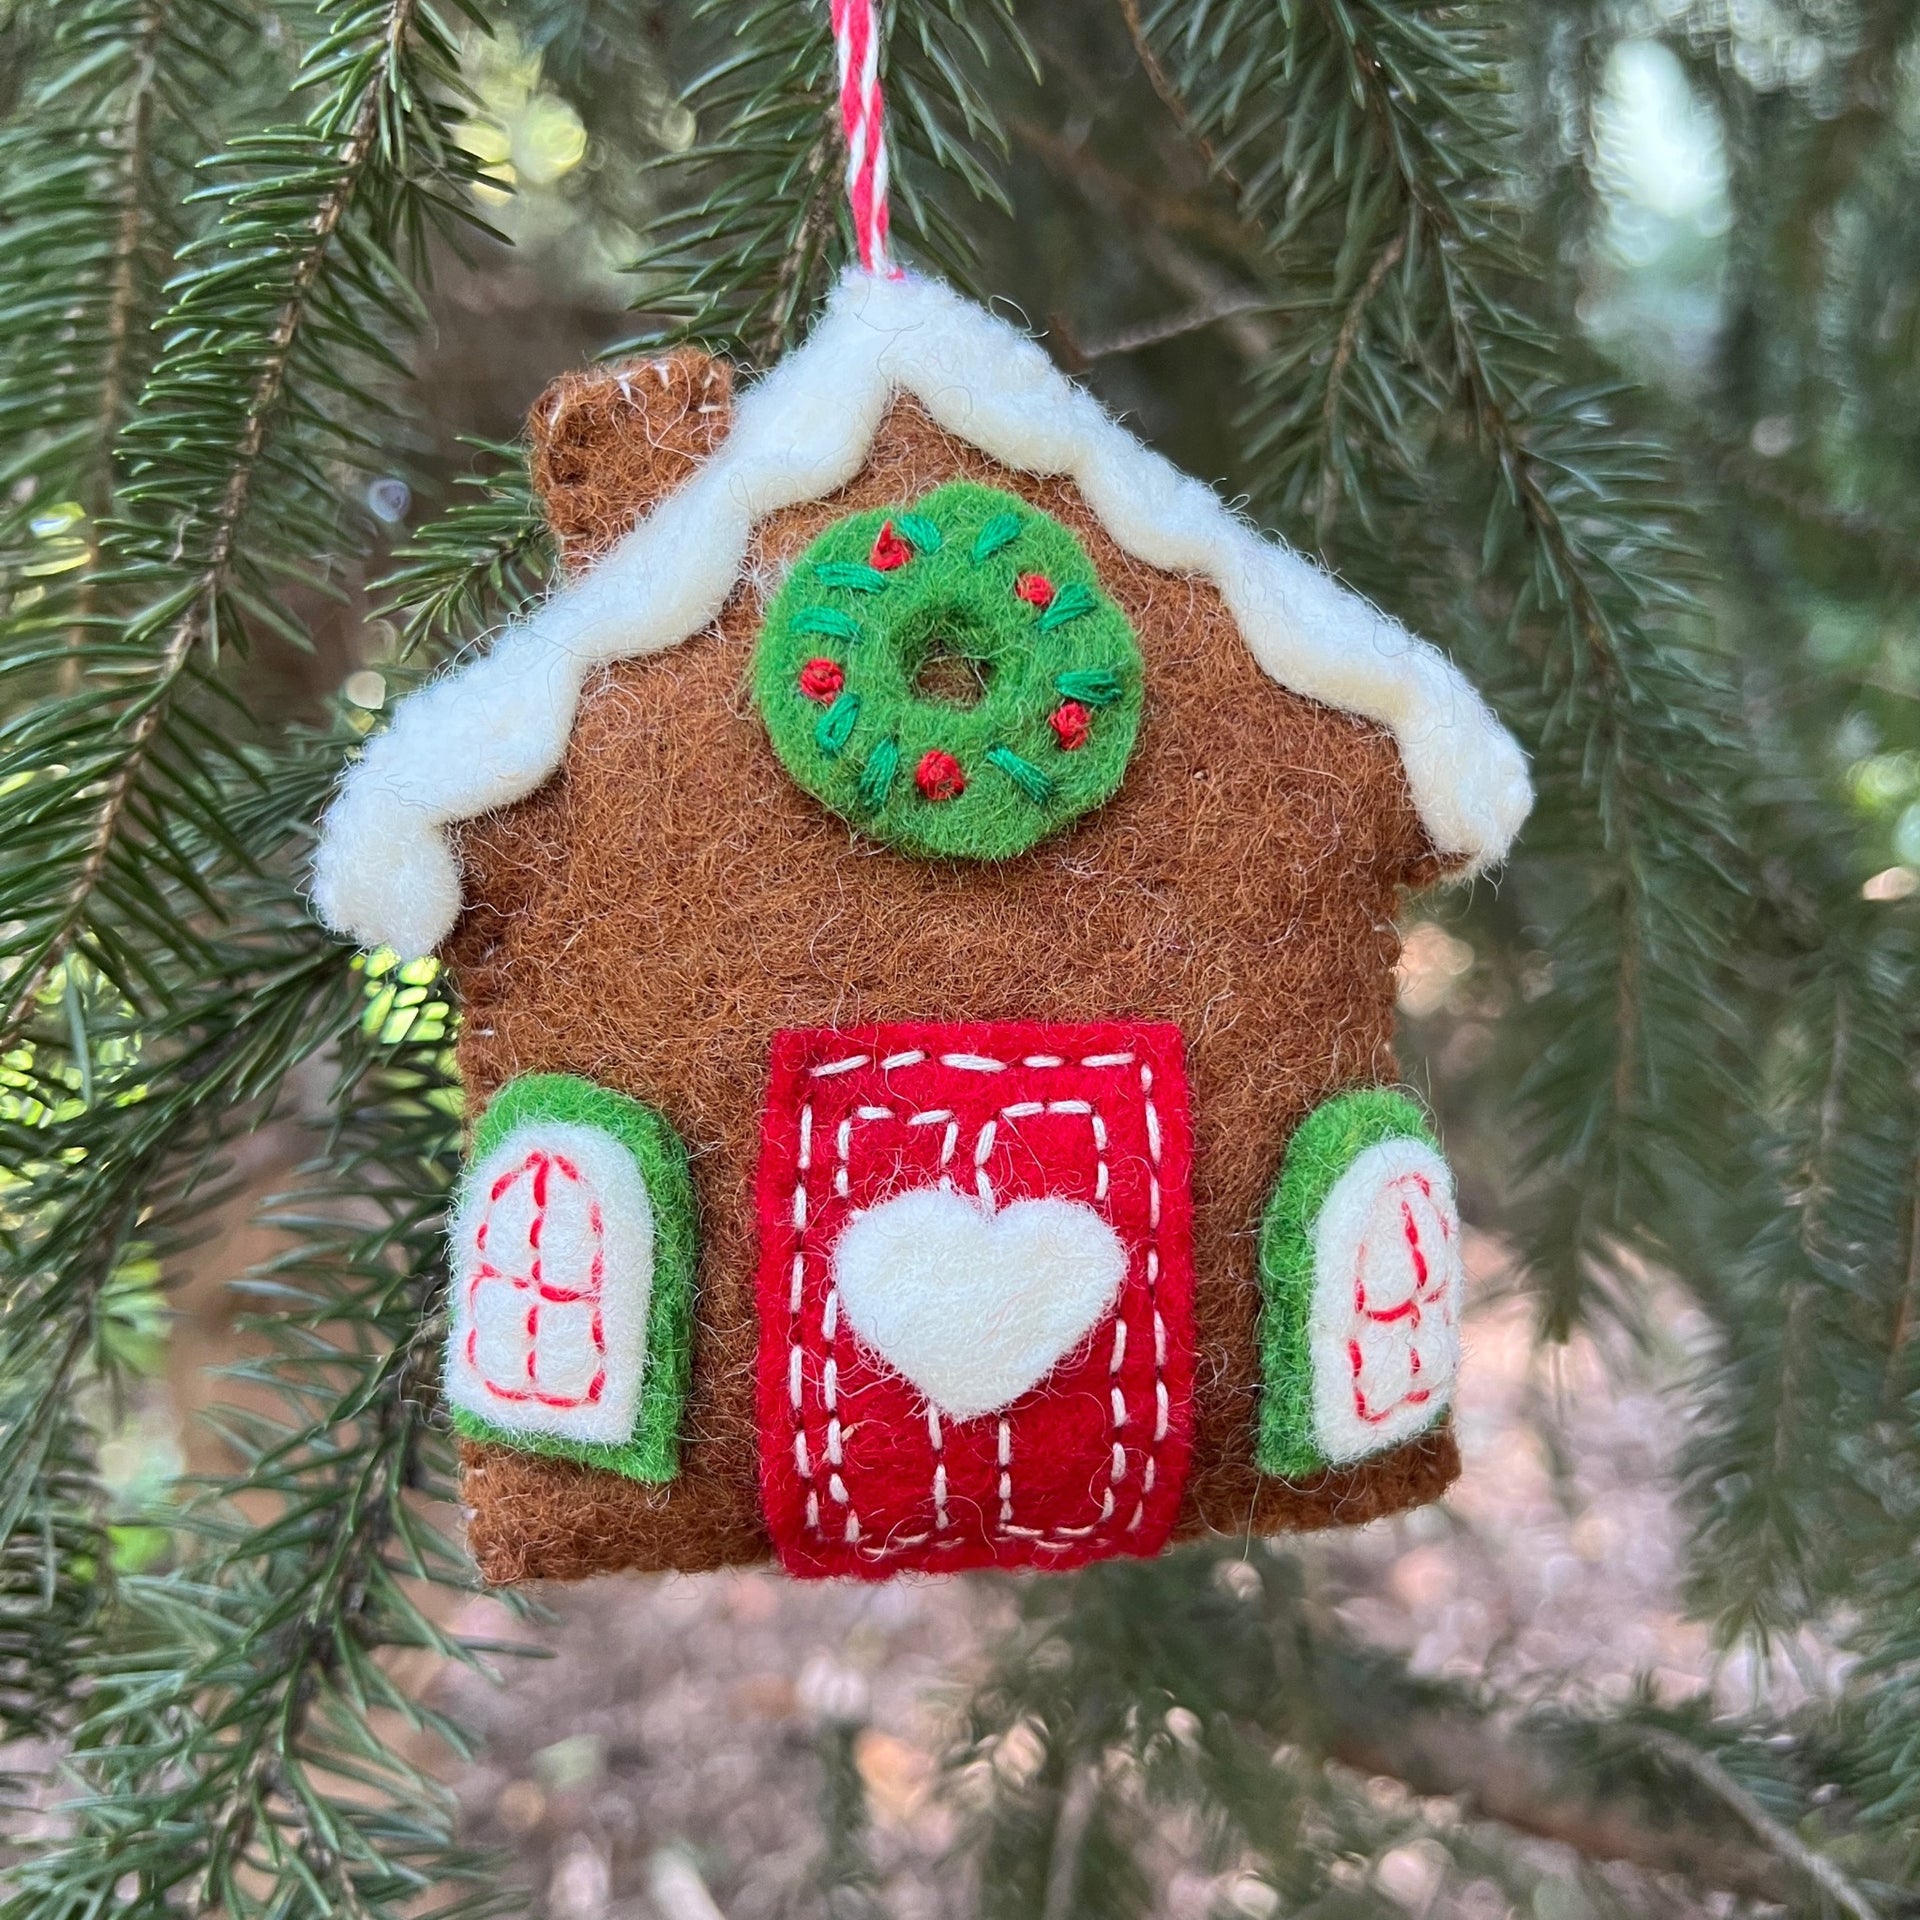 cute felt gingerbread house ornament hanging on evergreen tree